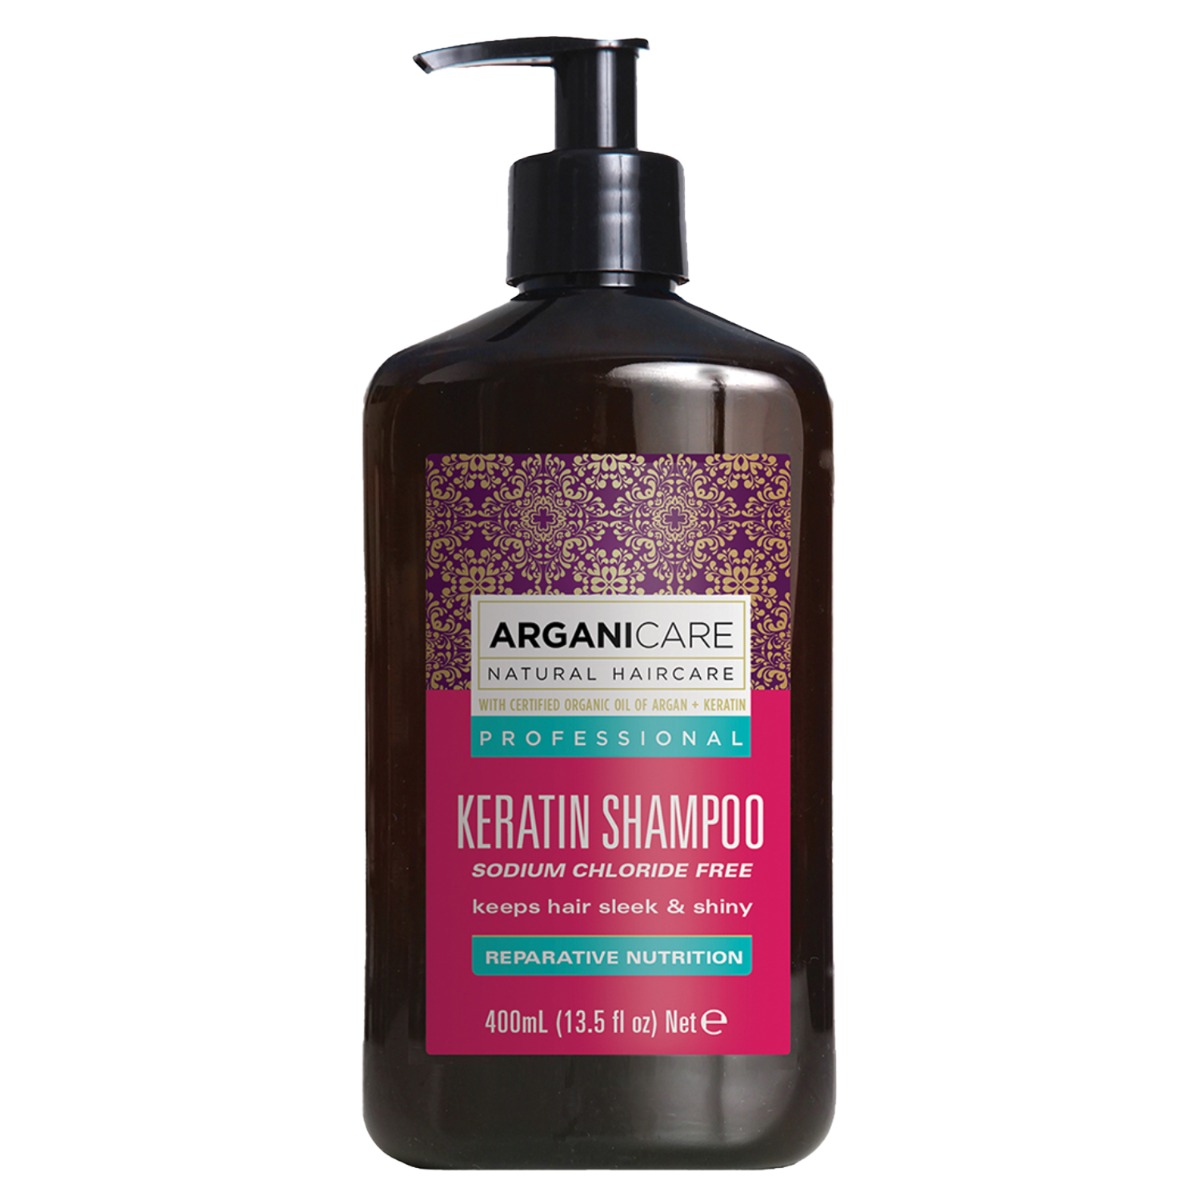 Arganicare Organic Argan Oil And Keratin Shampoo, 400ml